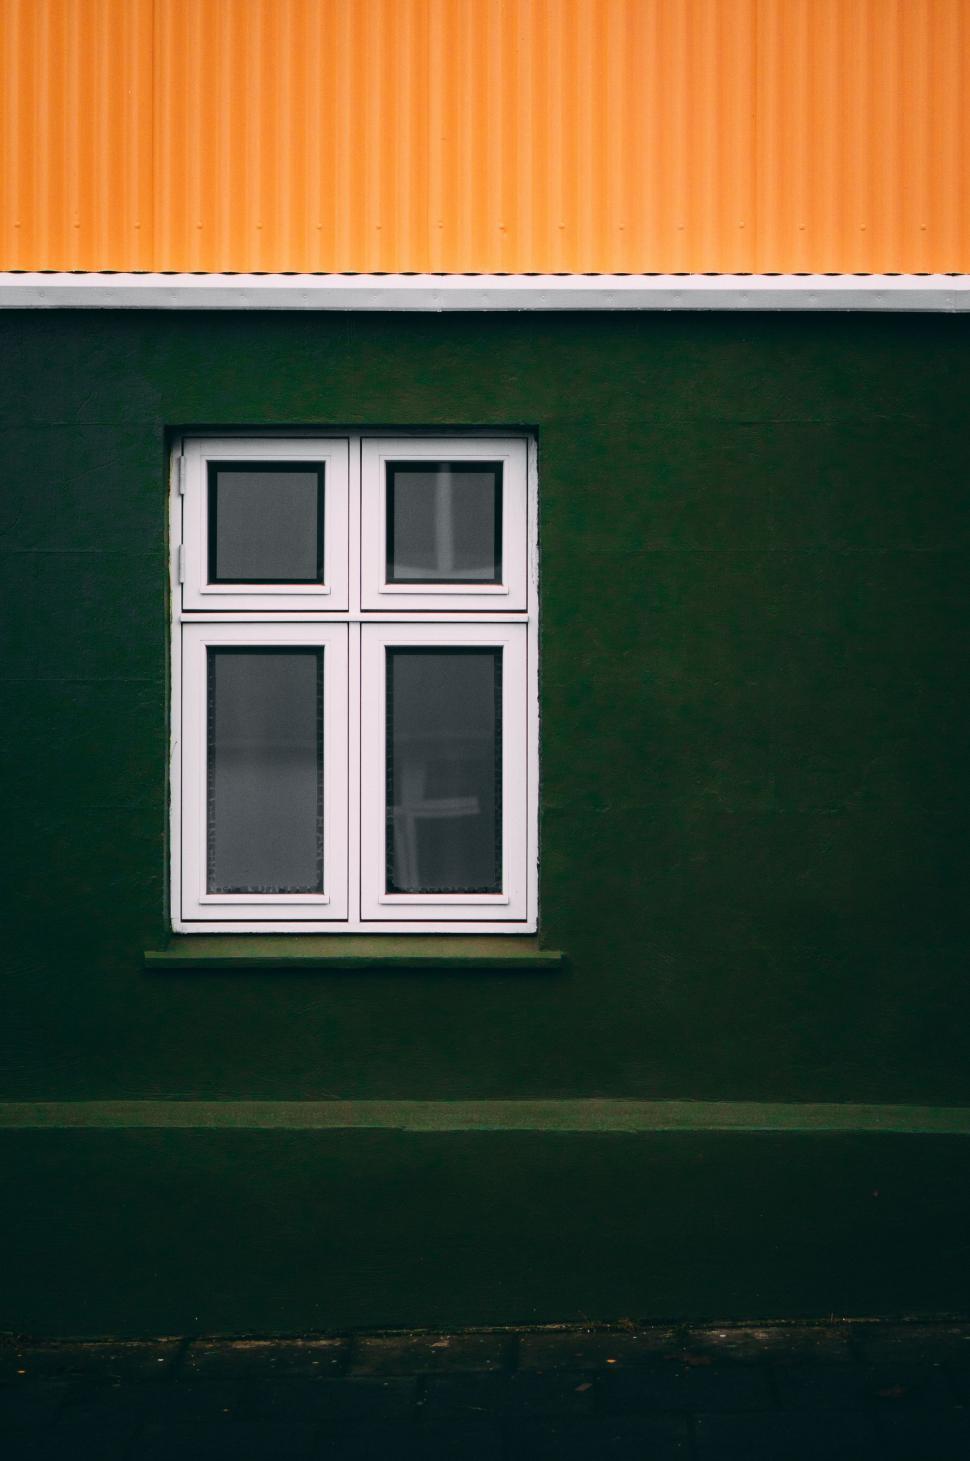 Free Image of window framework building door architecture home 